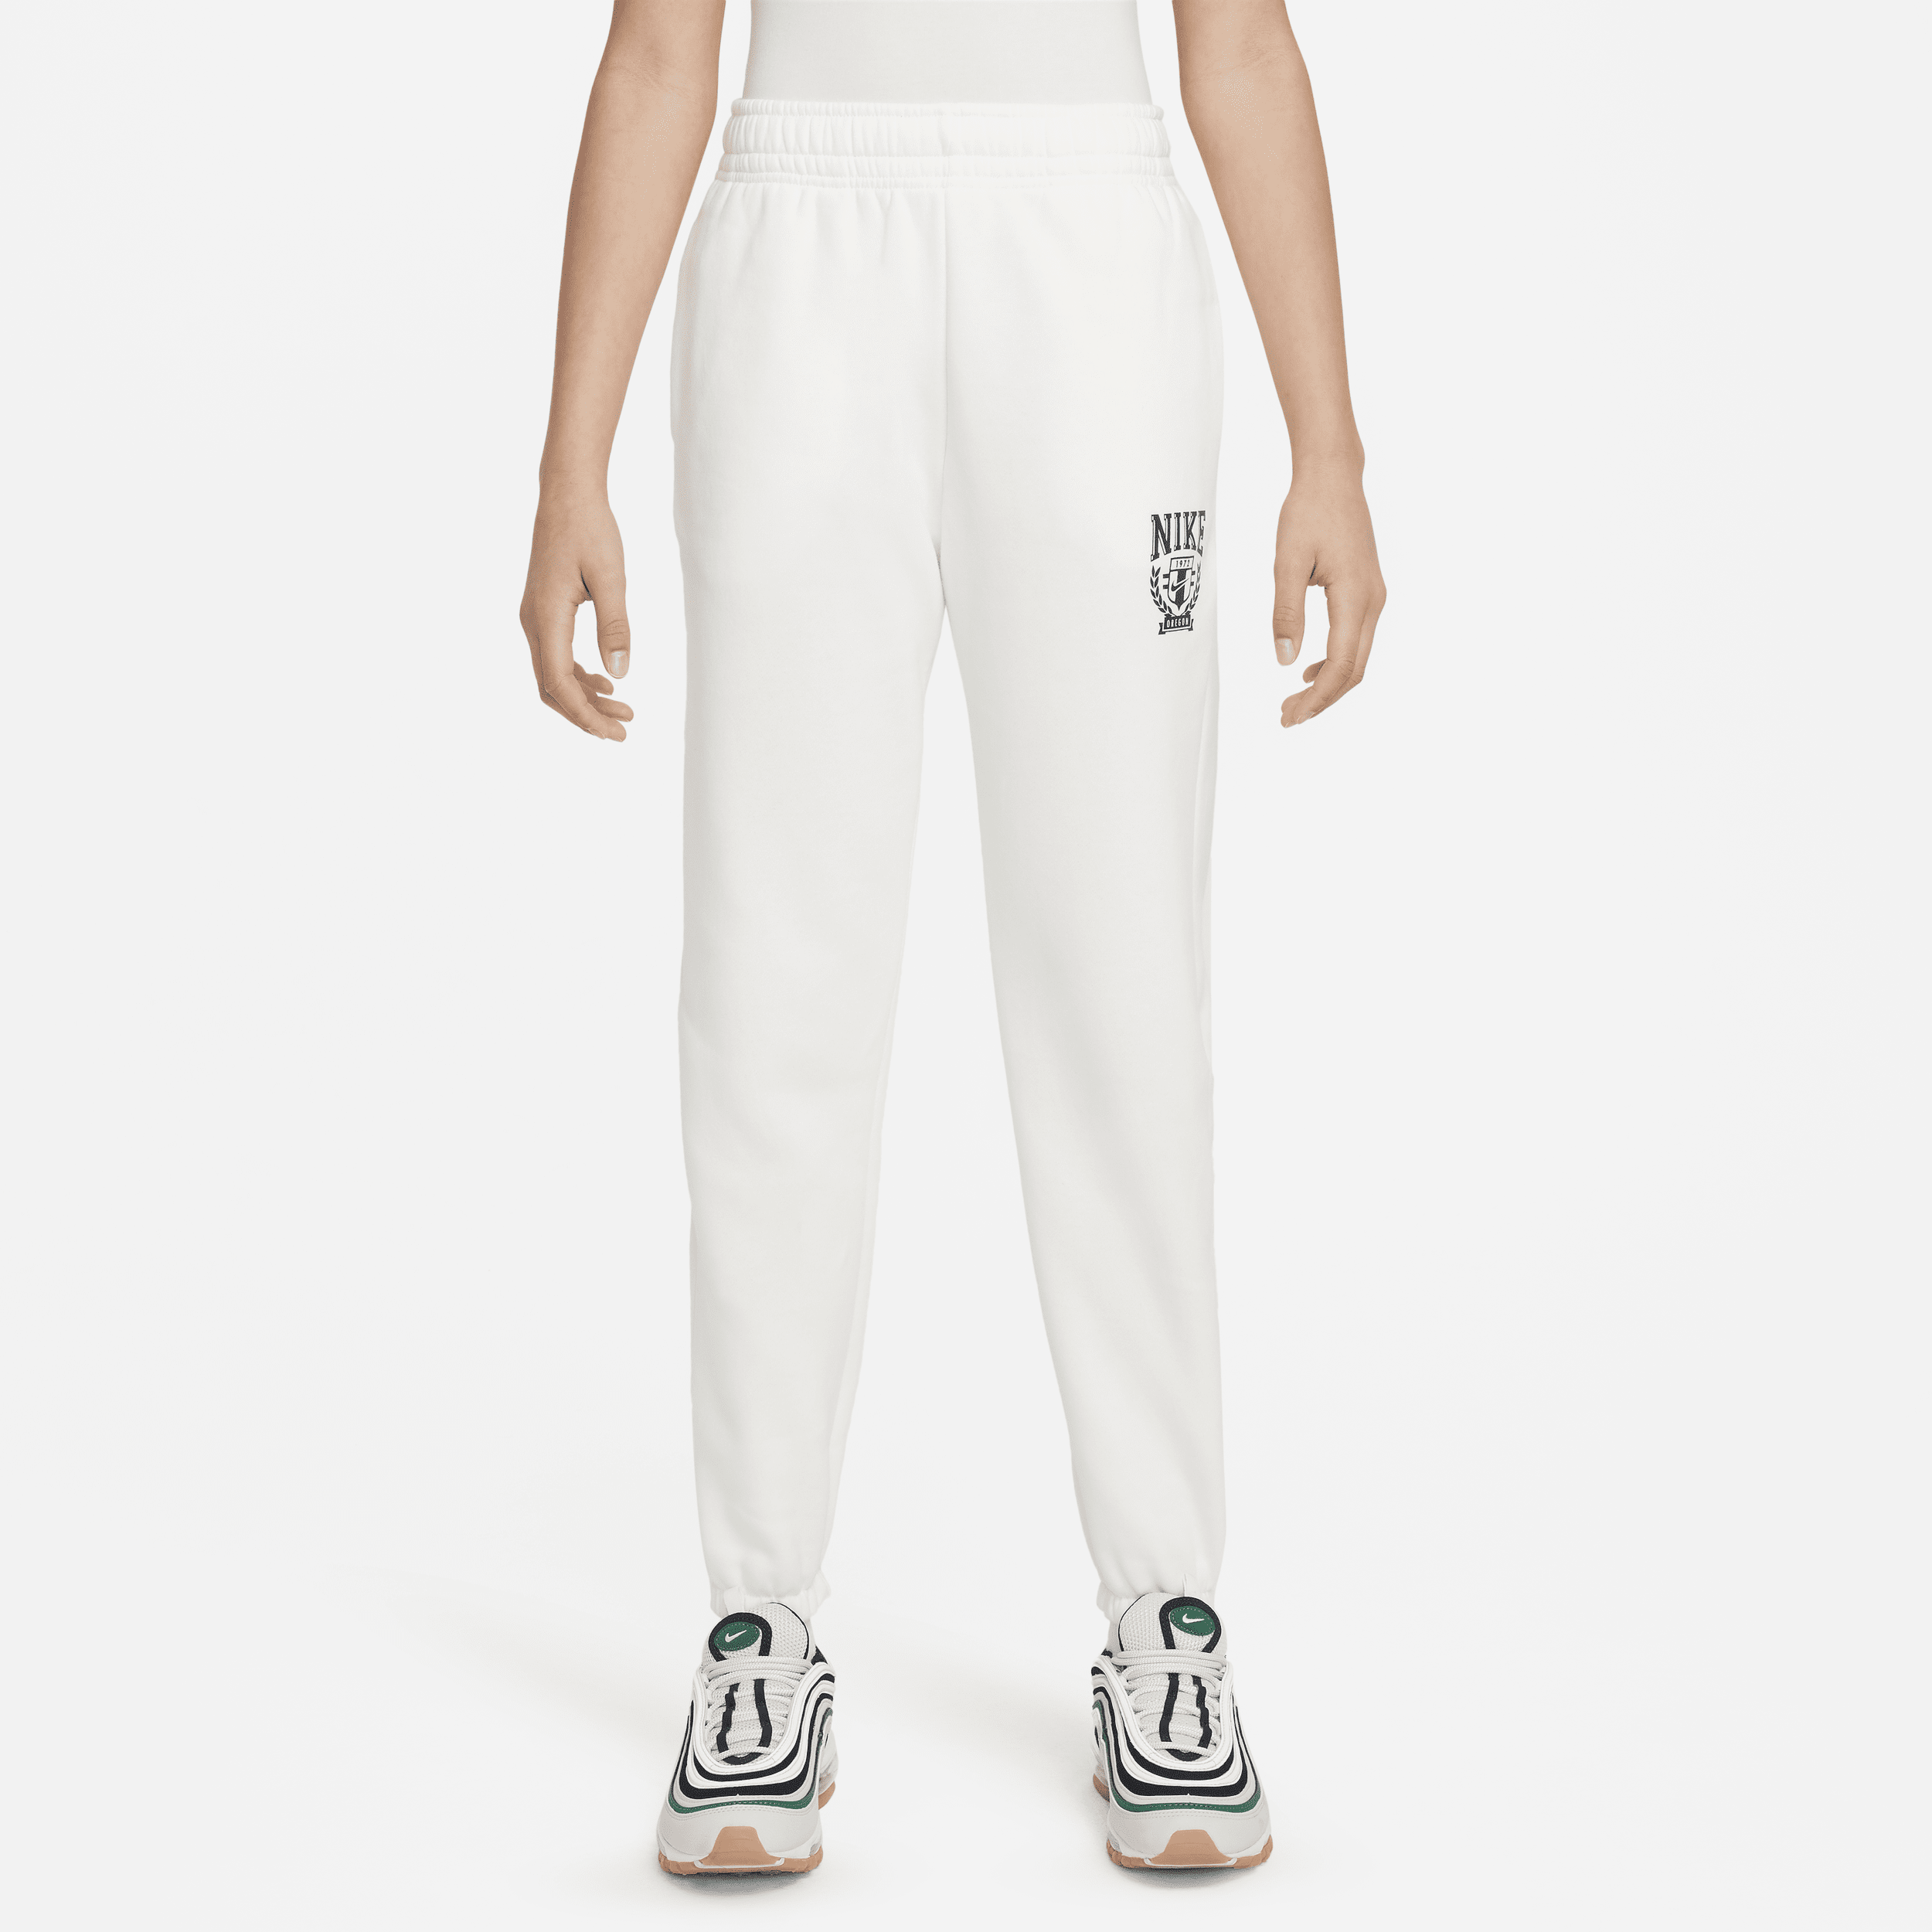 Pantaloni oversize in fleece Nike Sportswear – Ragazza - Bianco